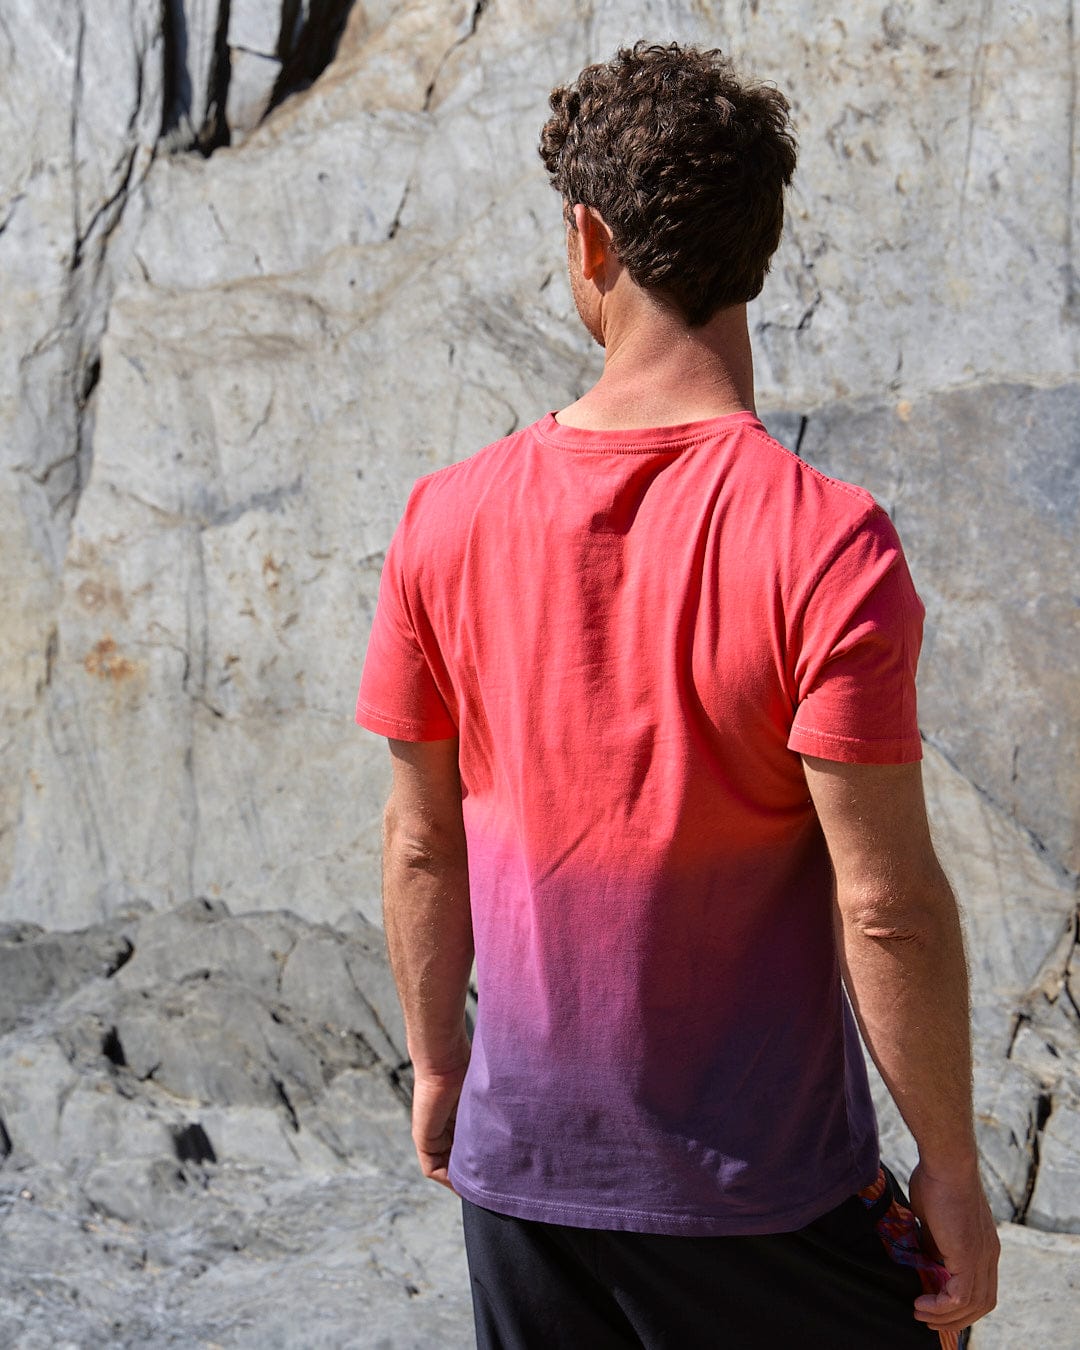 A man standing in front of a rock wearing Saltrock's Poolside - Mens Dip Die Short Sleeve T-Shirt in Pink.